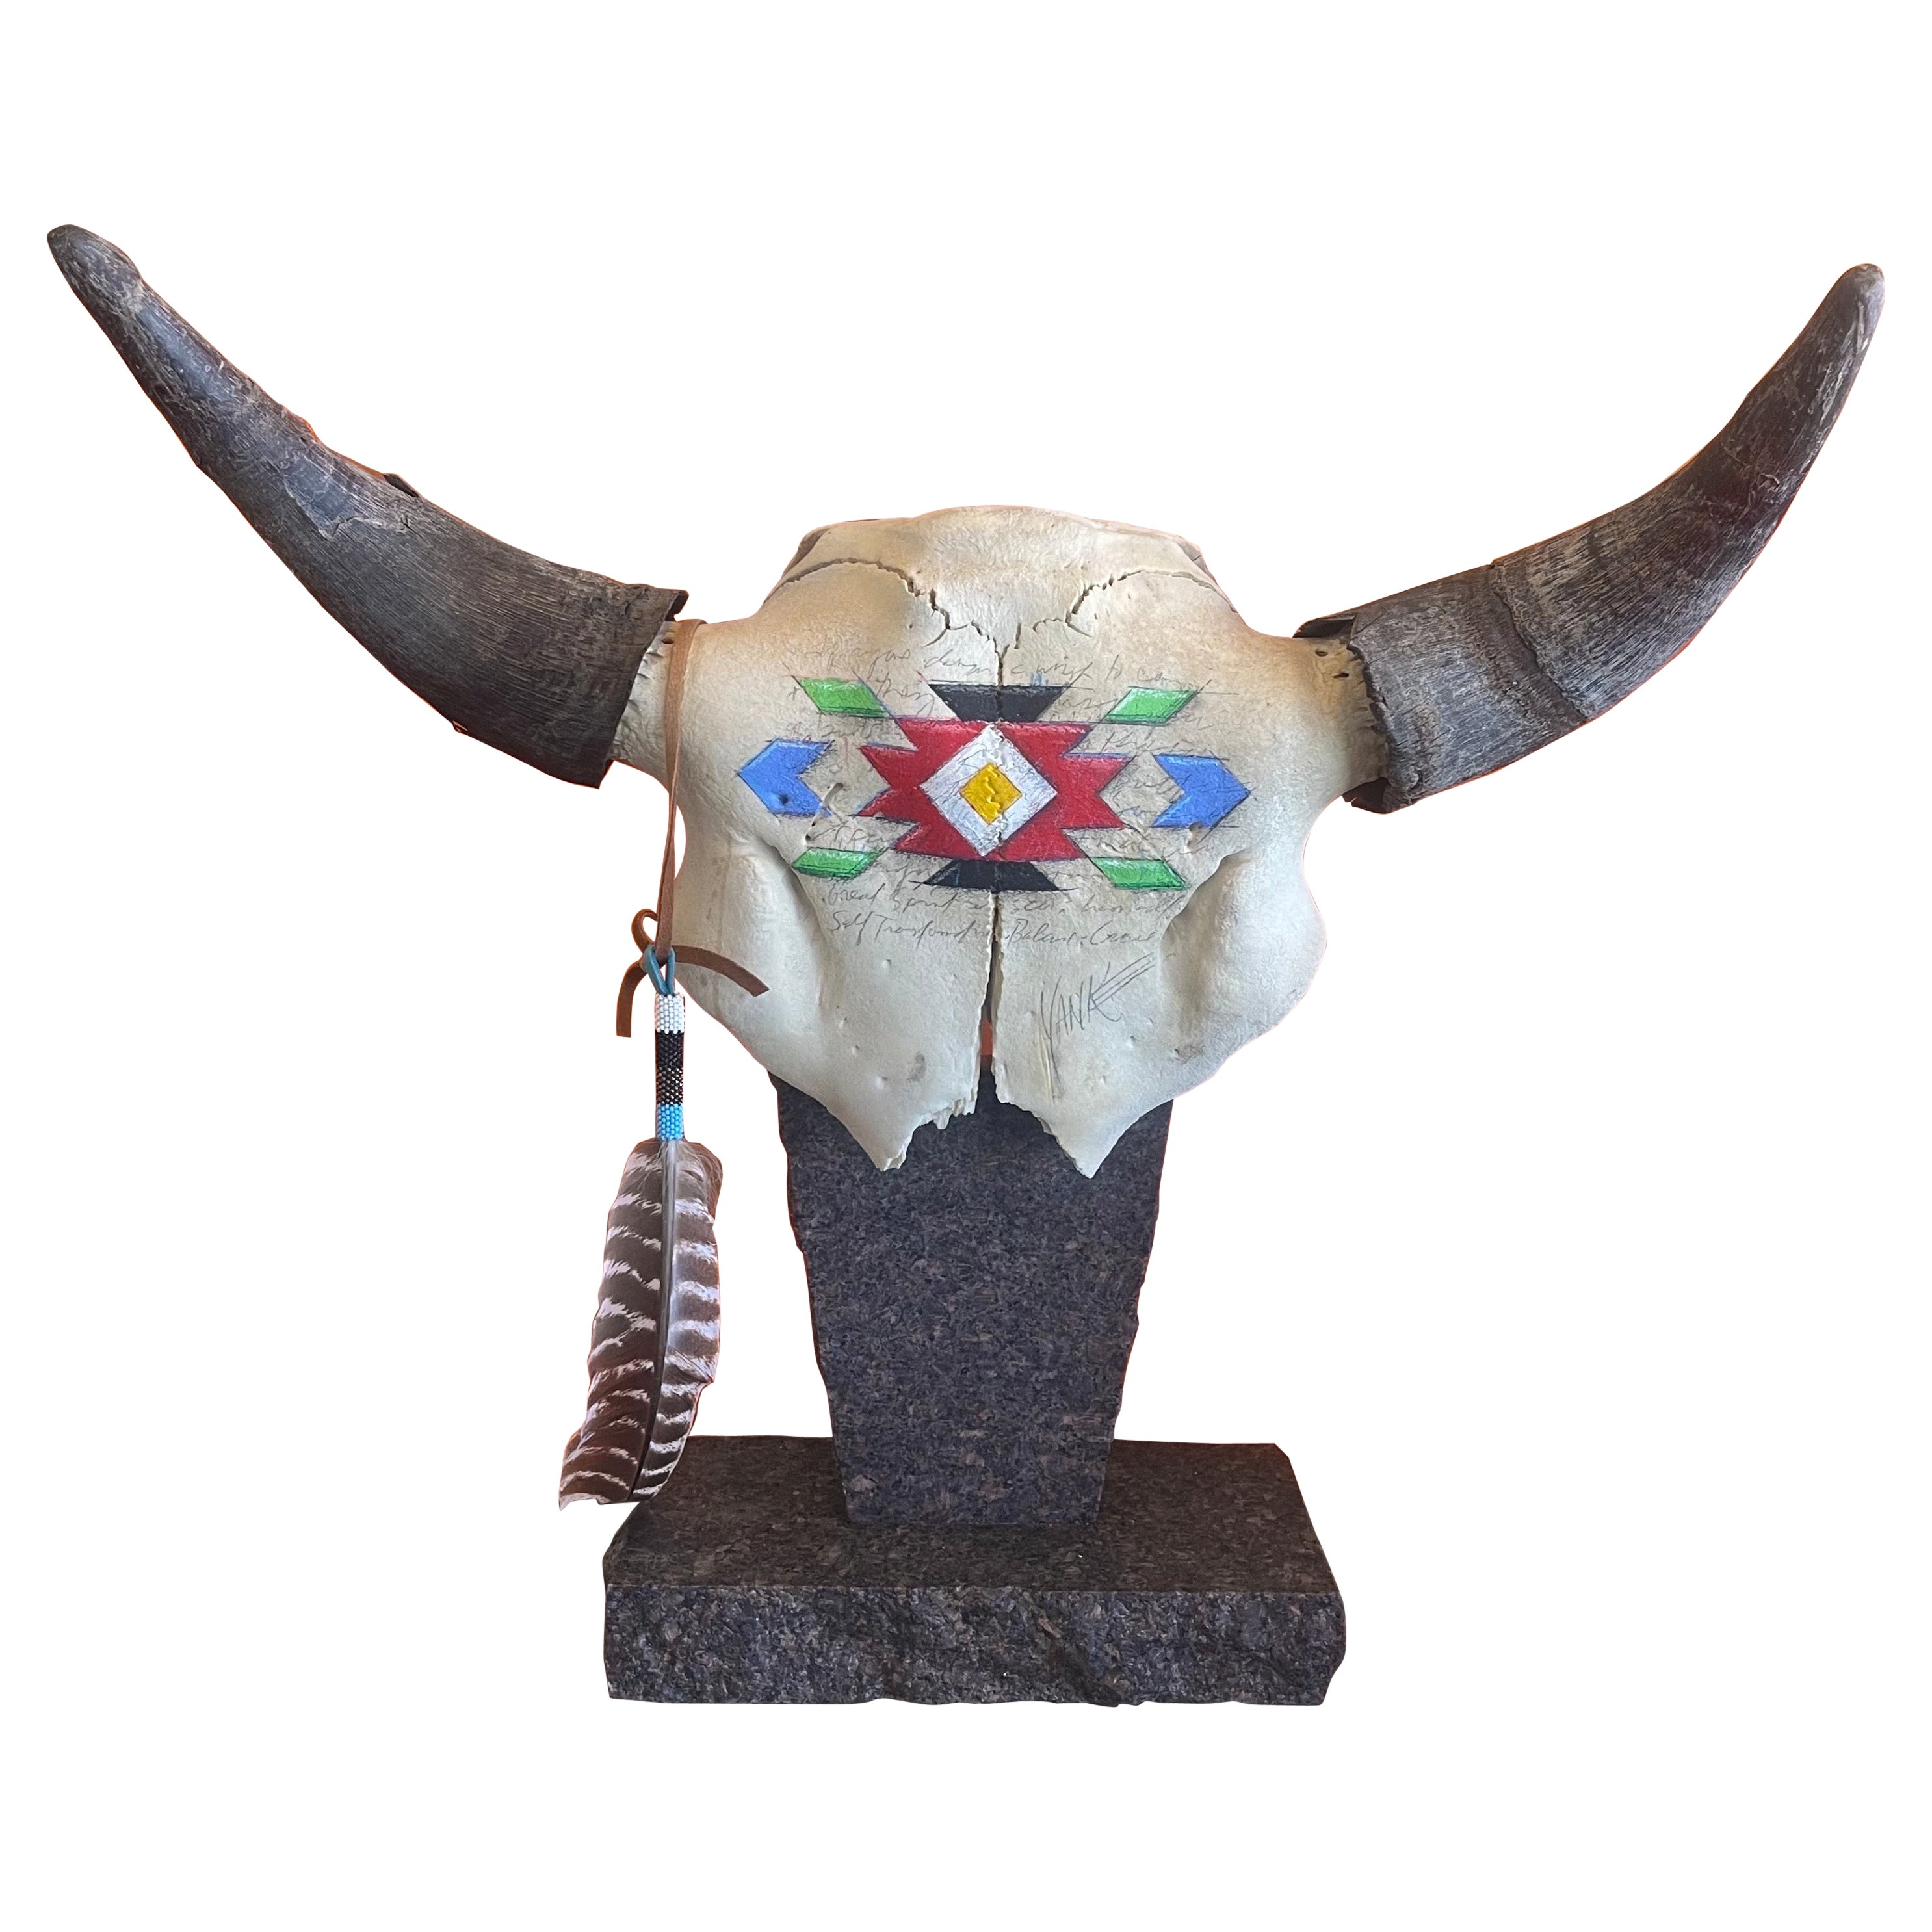 Painted North American Steer Skull with Horns on Granite Base by Tim Yanke